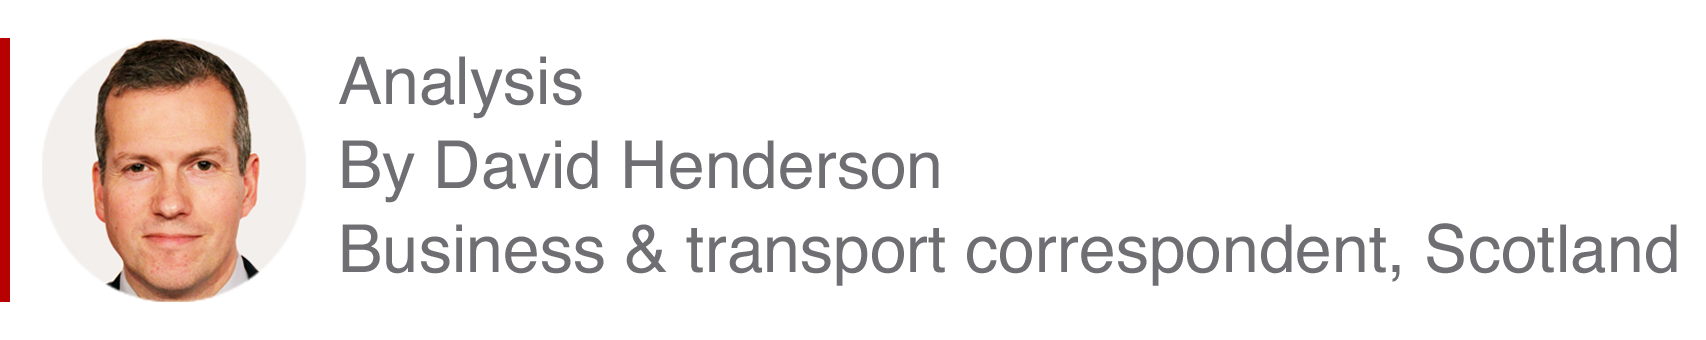 Analysis box by David Henderson, Business and transport correspondent, Scotland